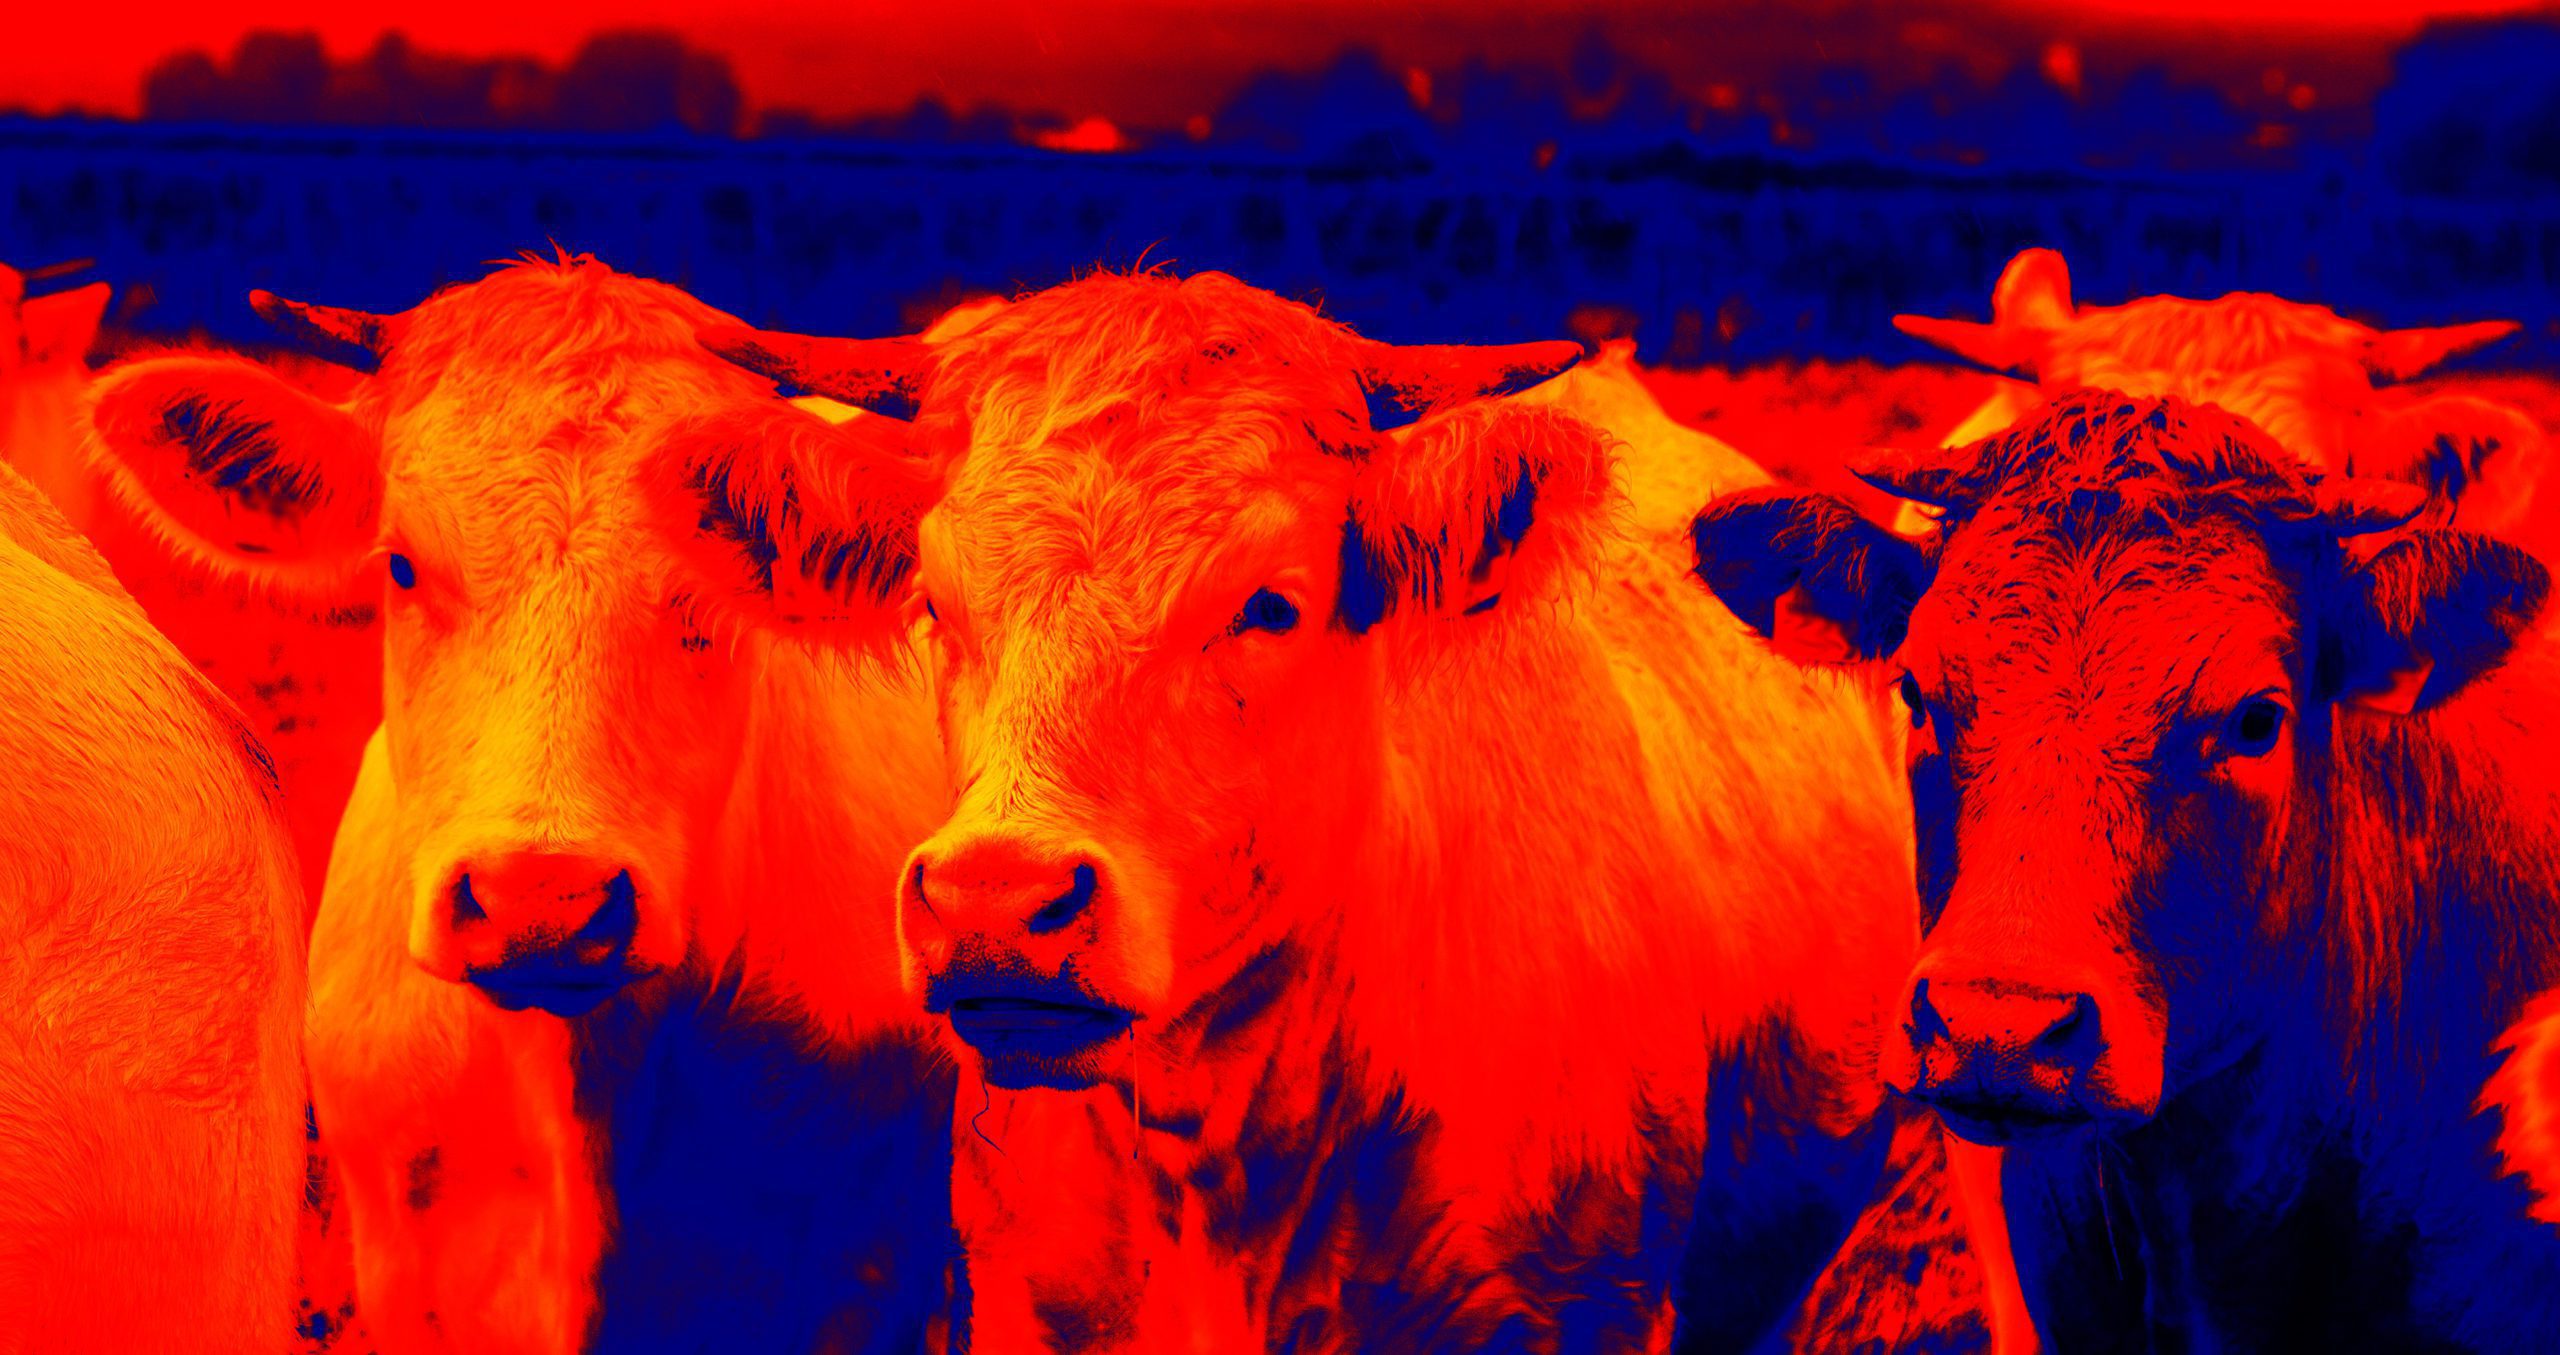 Cattle | Pro Earth Animal Health